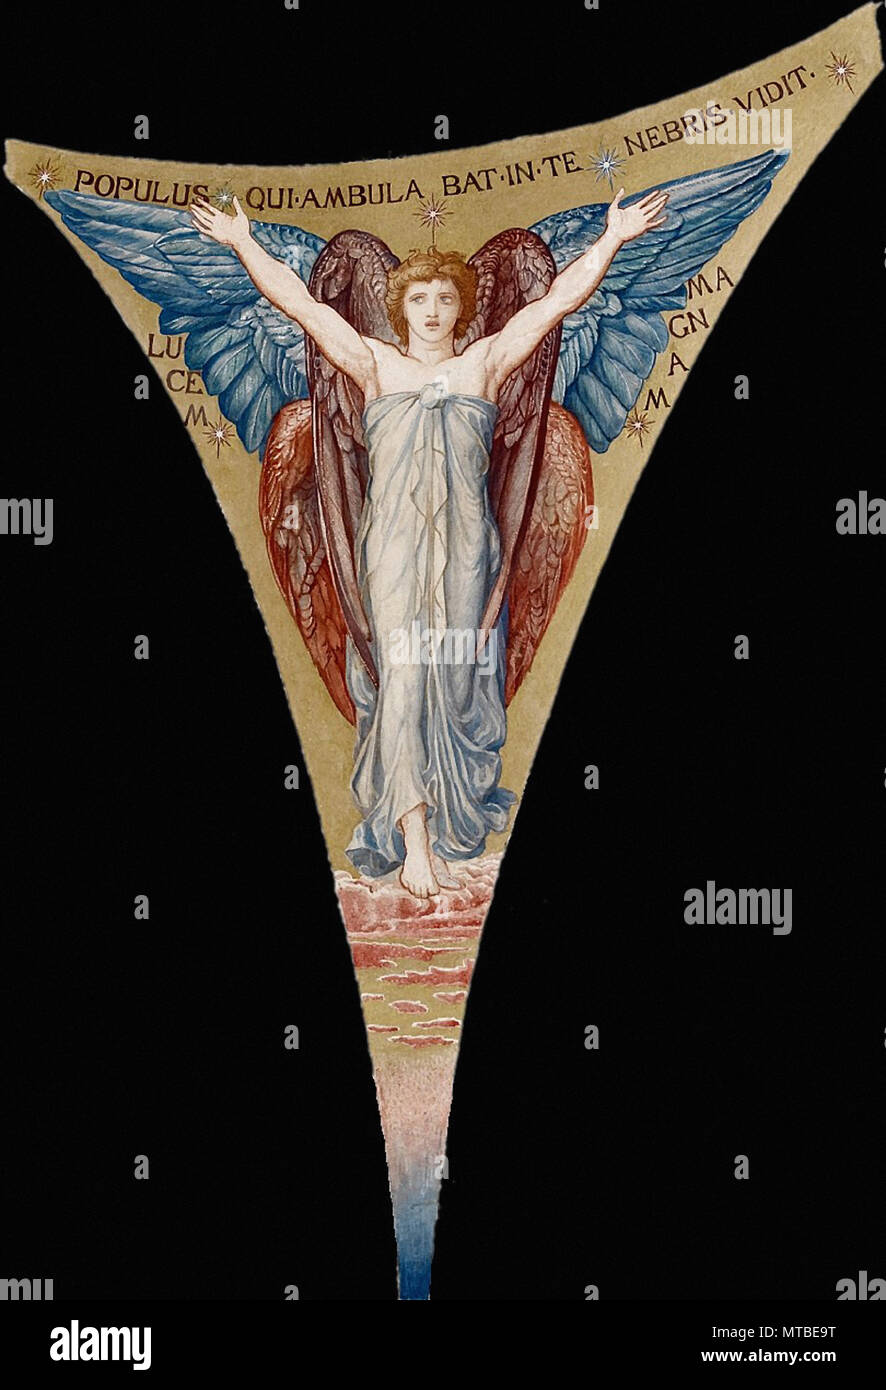 Richmond William Blake - Ascending Angel Stock Photo